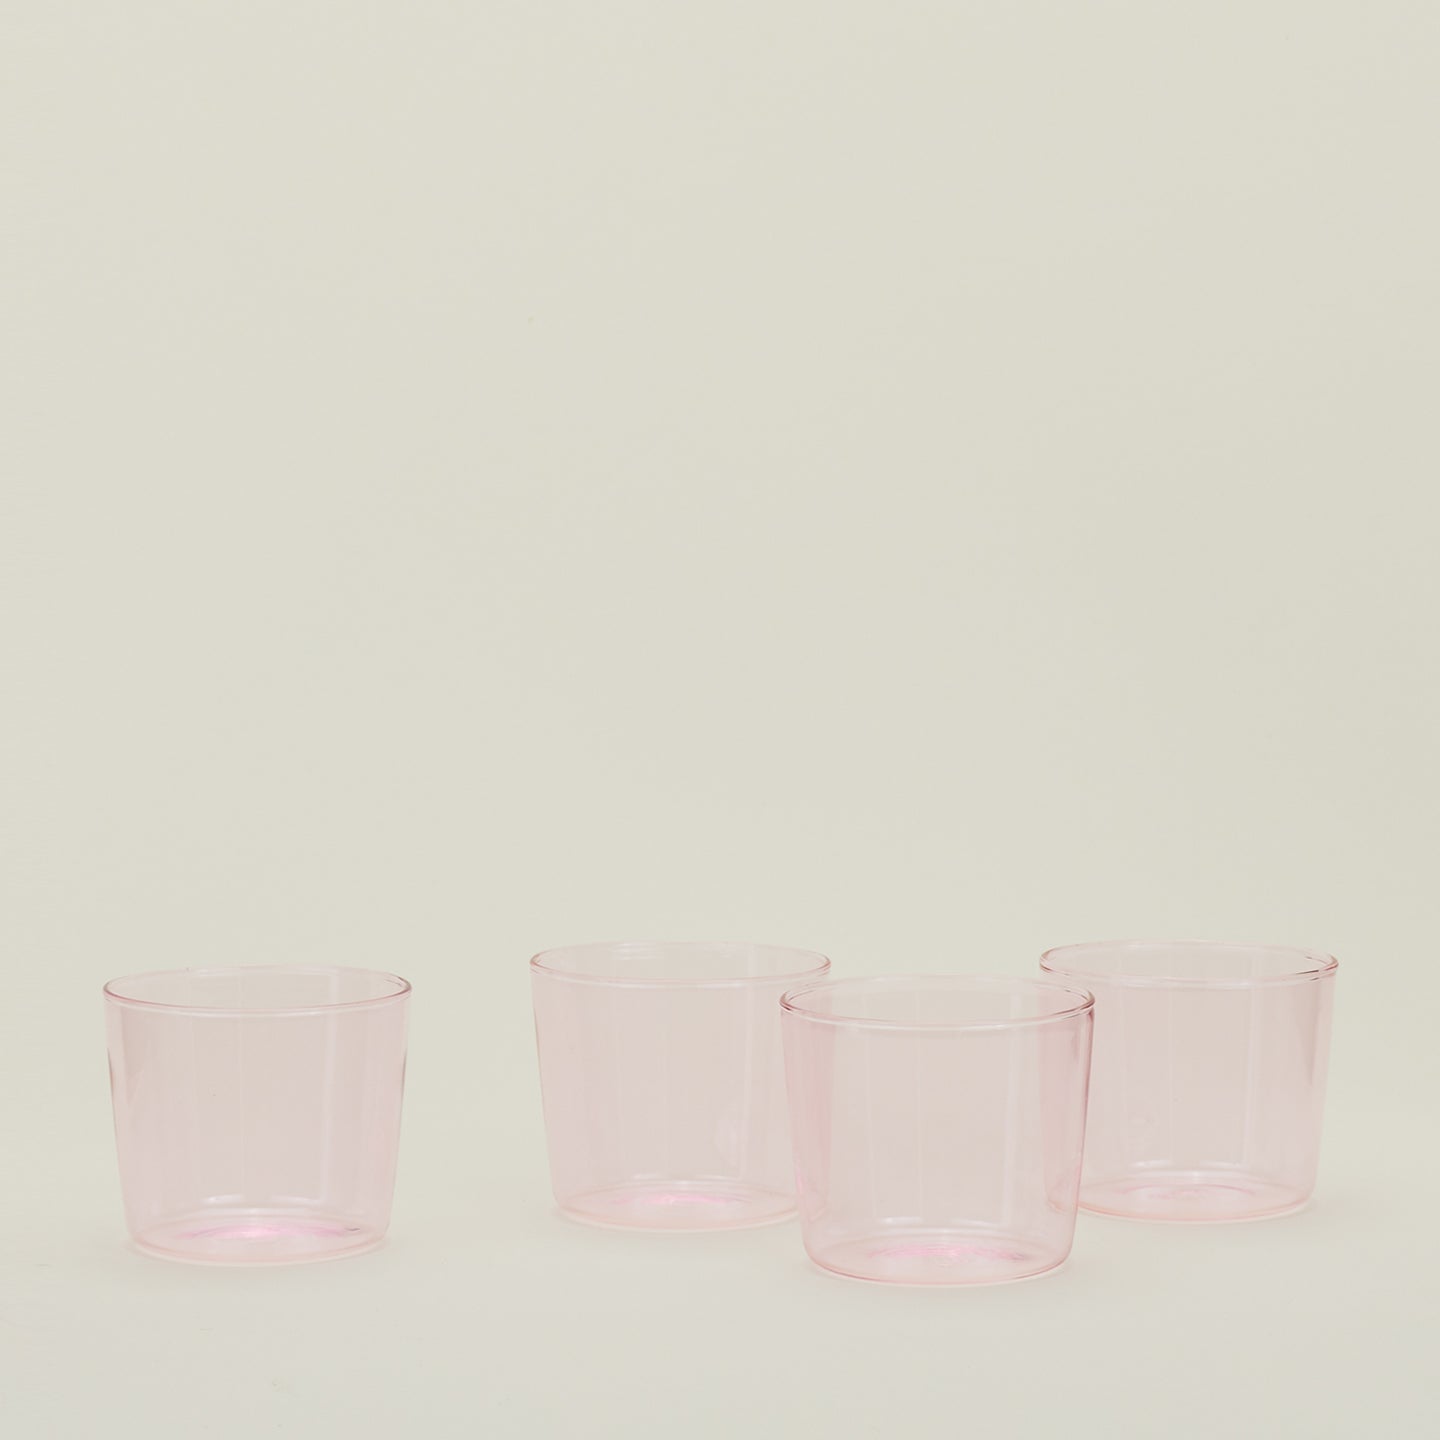 Four Small Essential Glasses in Blush.